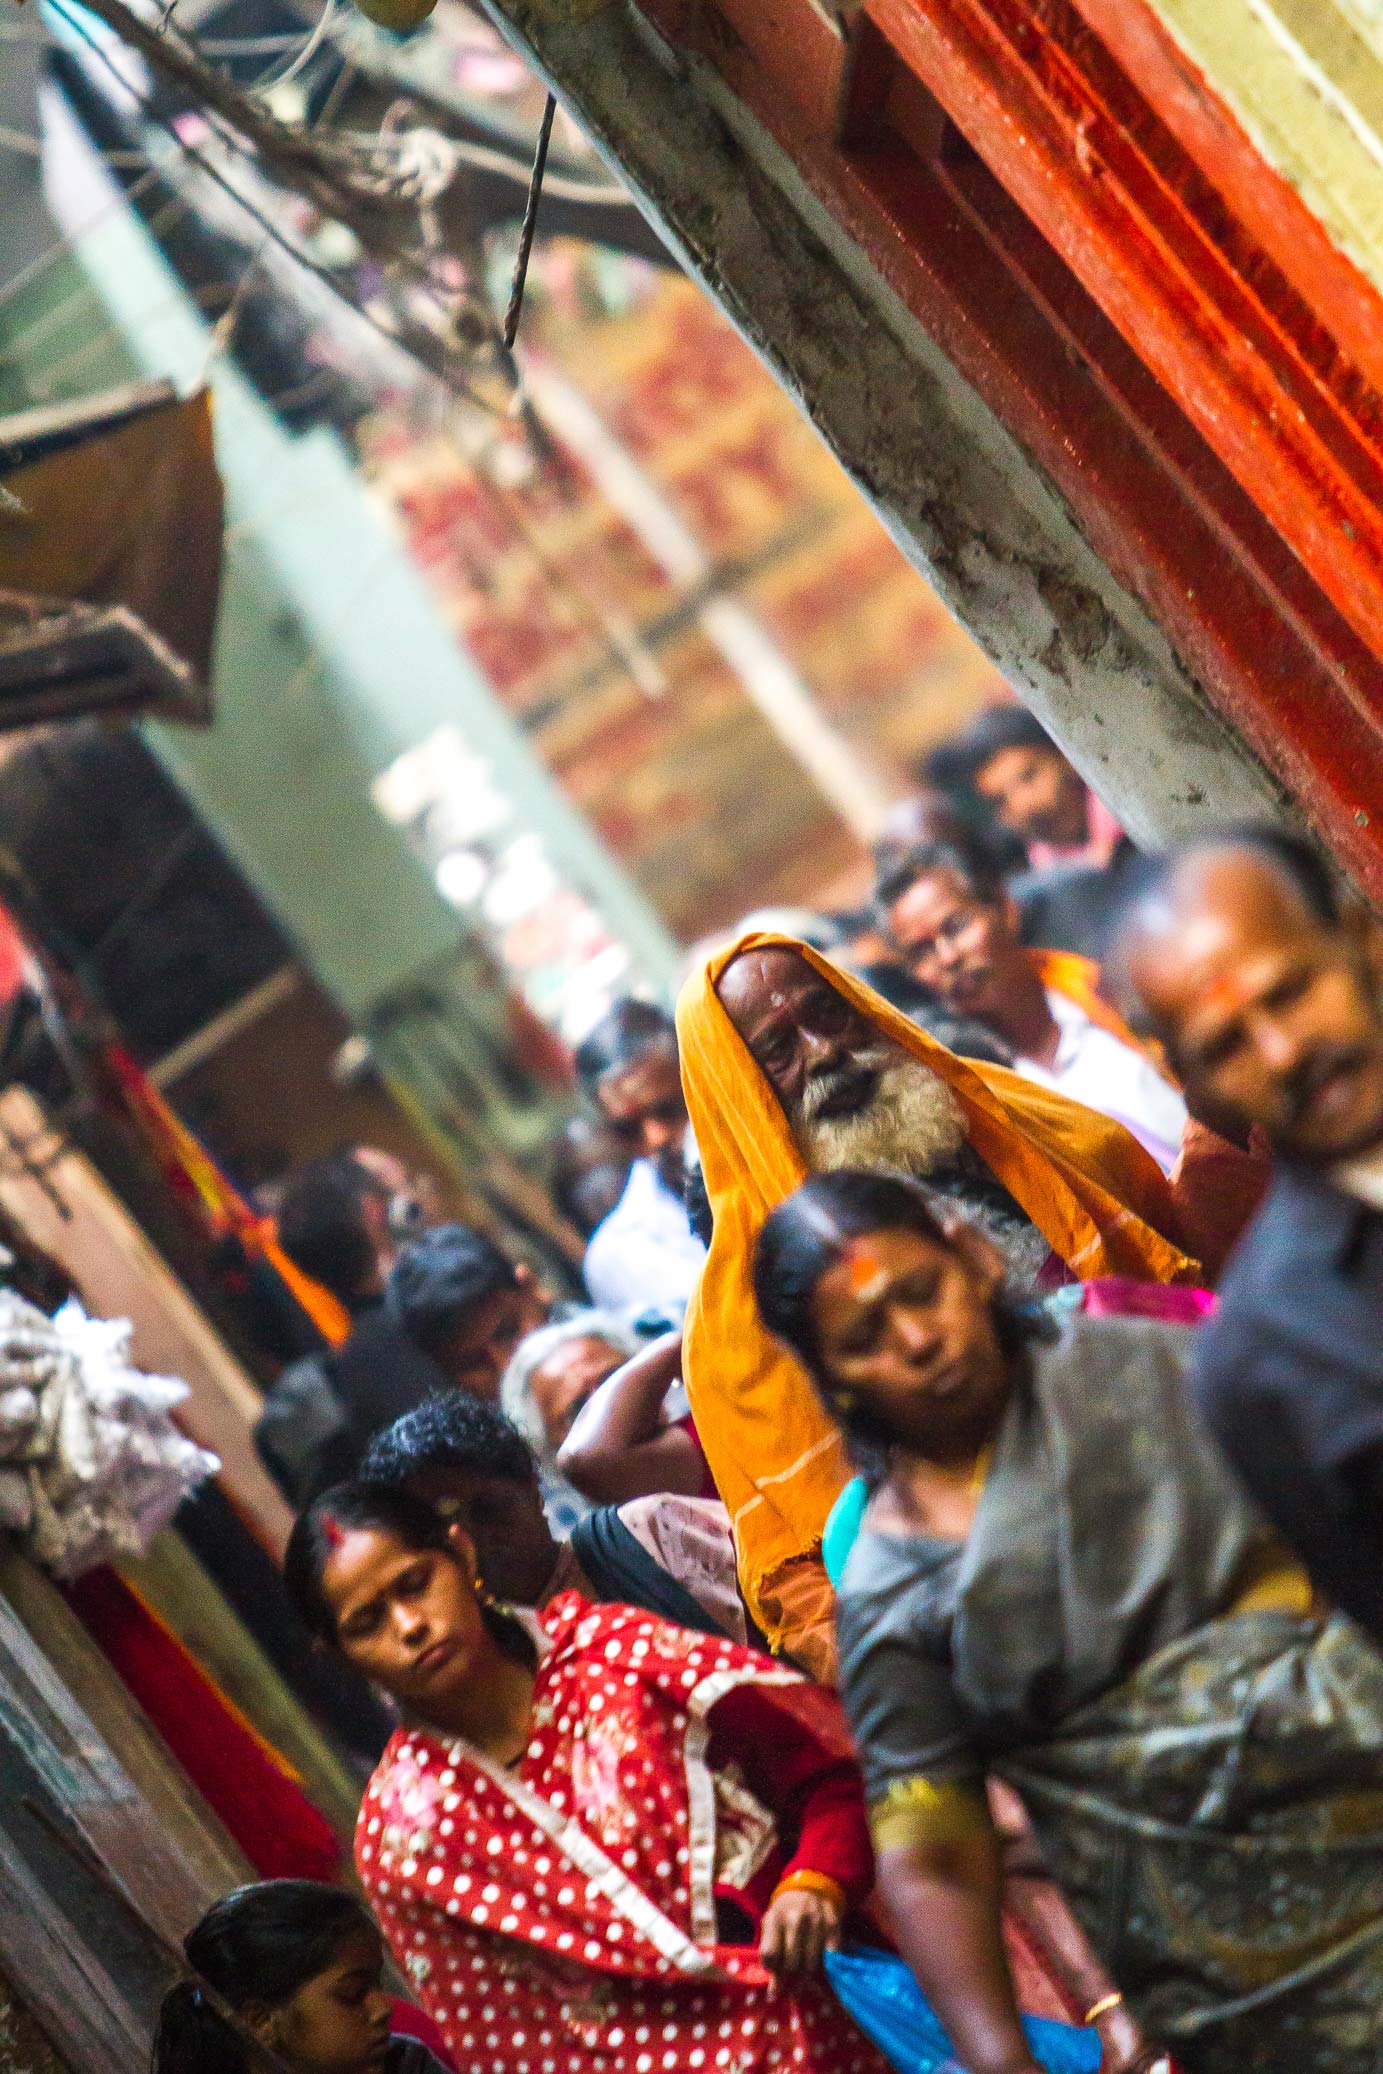 /Guewen/galeries/public/Voyages/Inde/varanasi/divers/rues/Varanasi_062.jpg